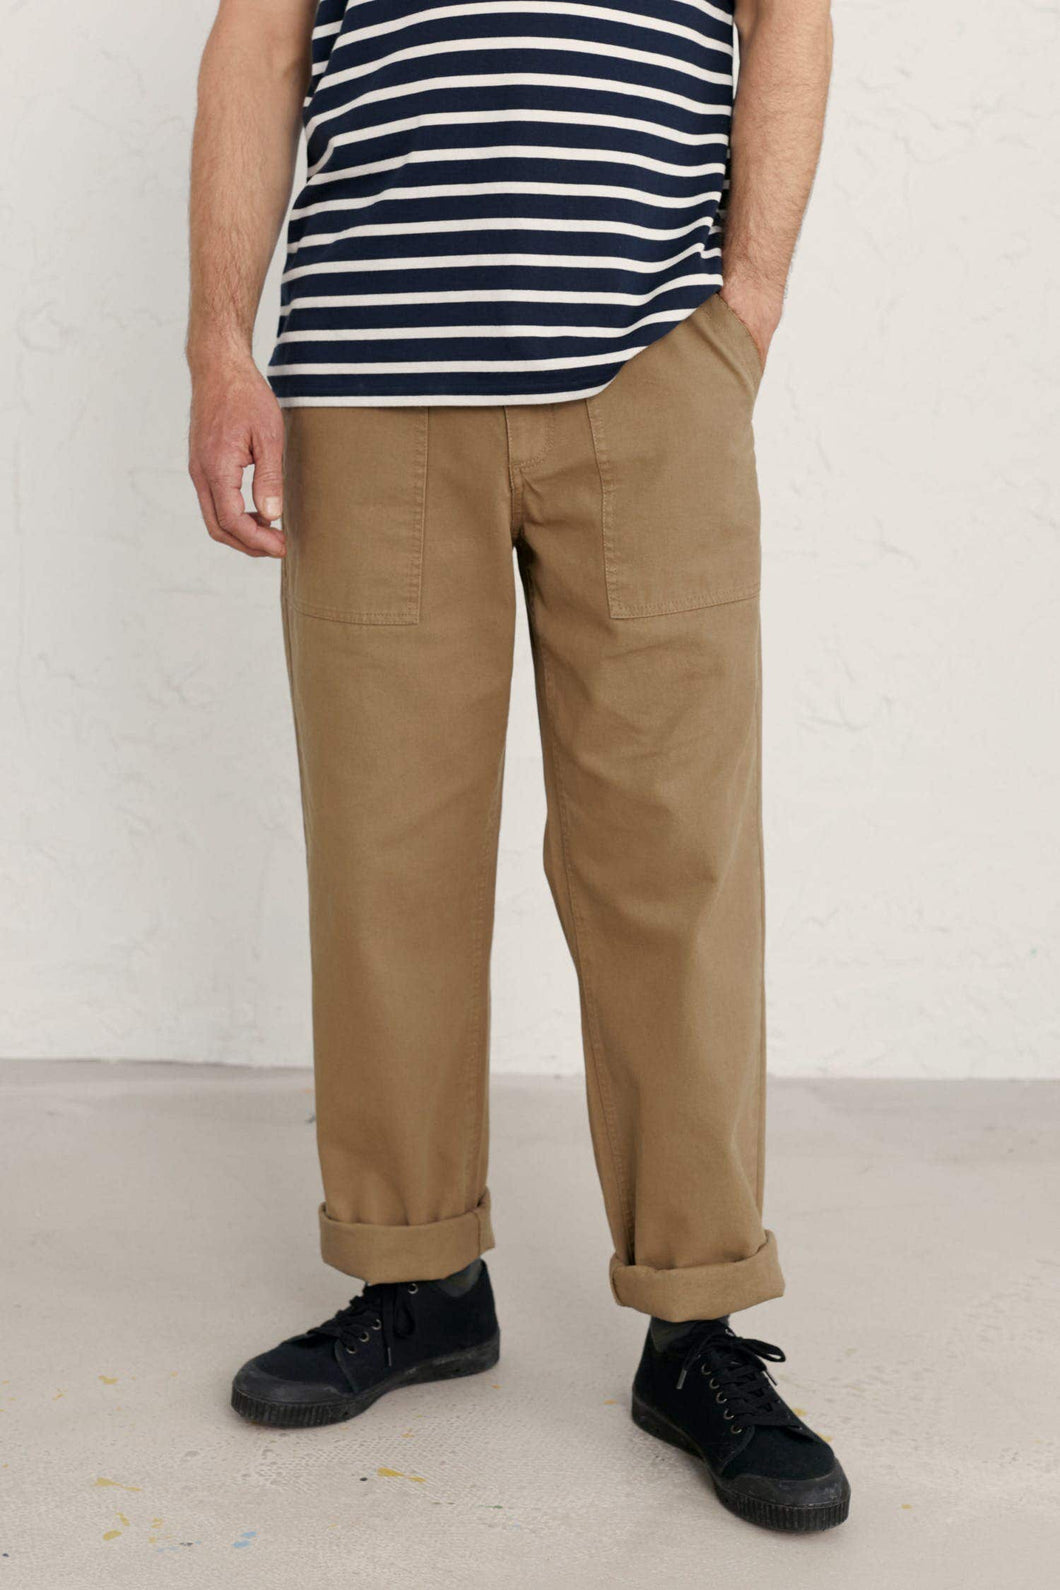 Seasalt Men's Journeyman trousers in Canvas